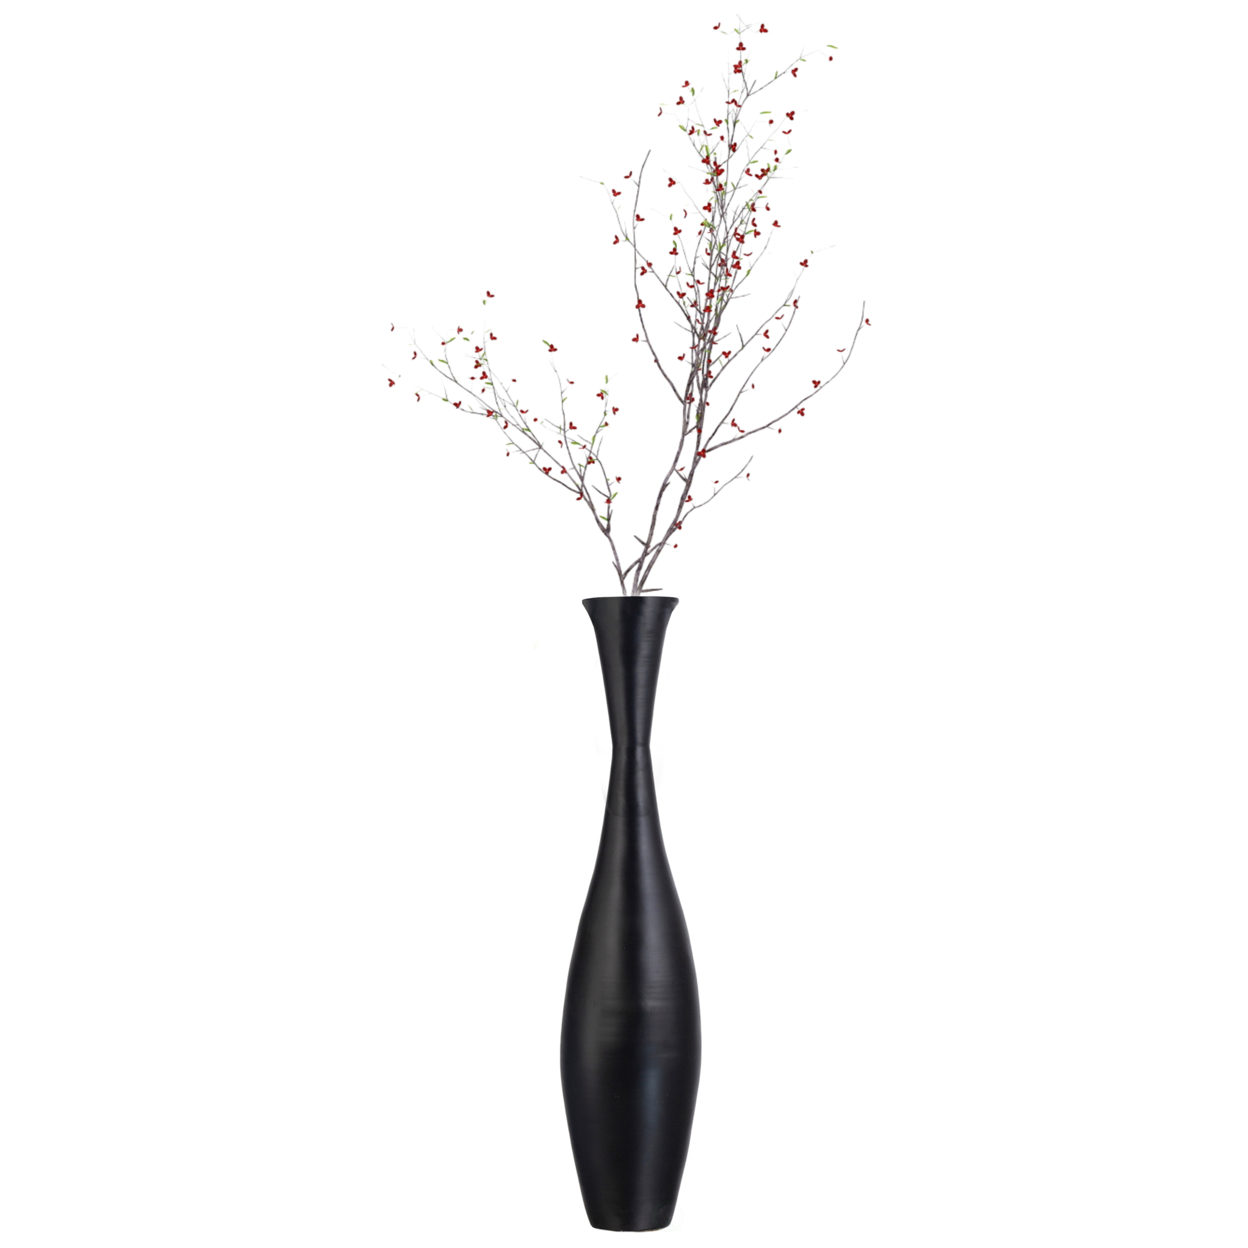 Decorative Contemporary Bamboo Floor Flower Vase, 43 Inch - Black